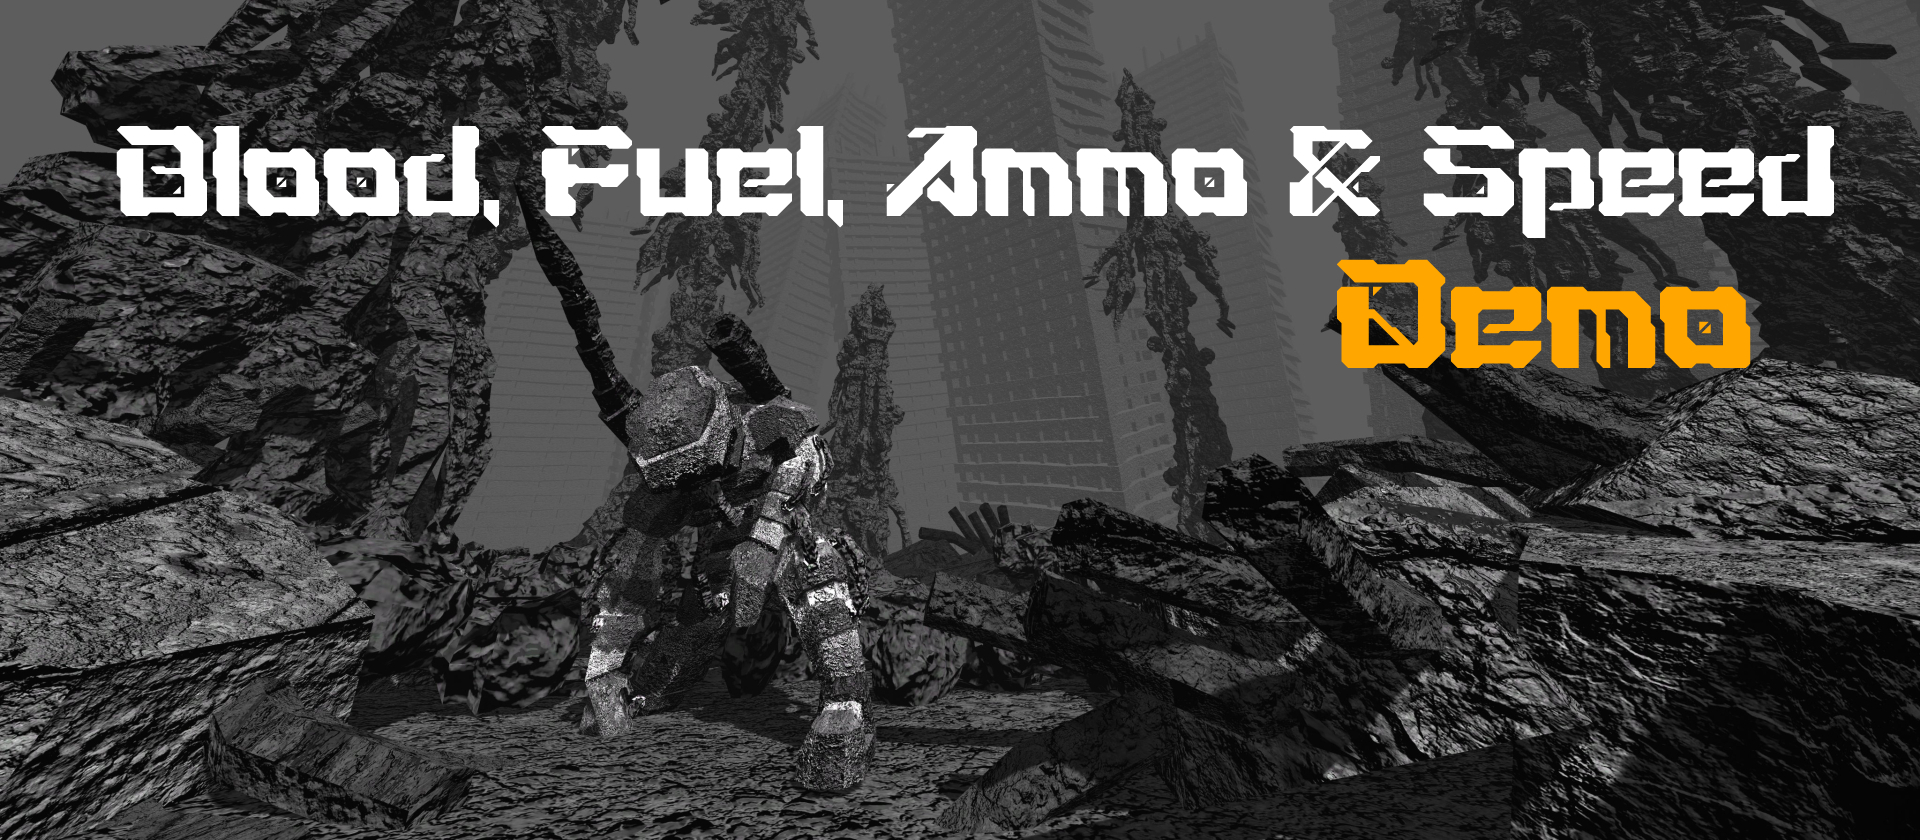 Blood, Fuel, Ammo & Speed Demo